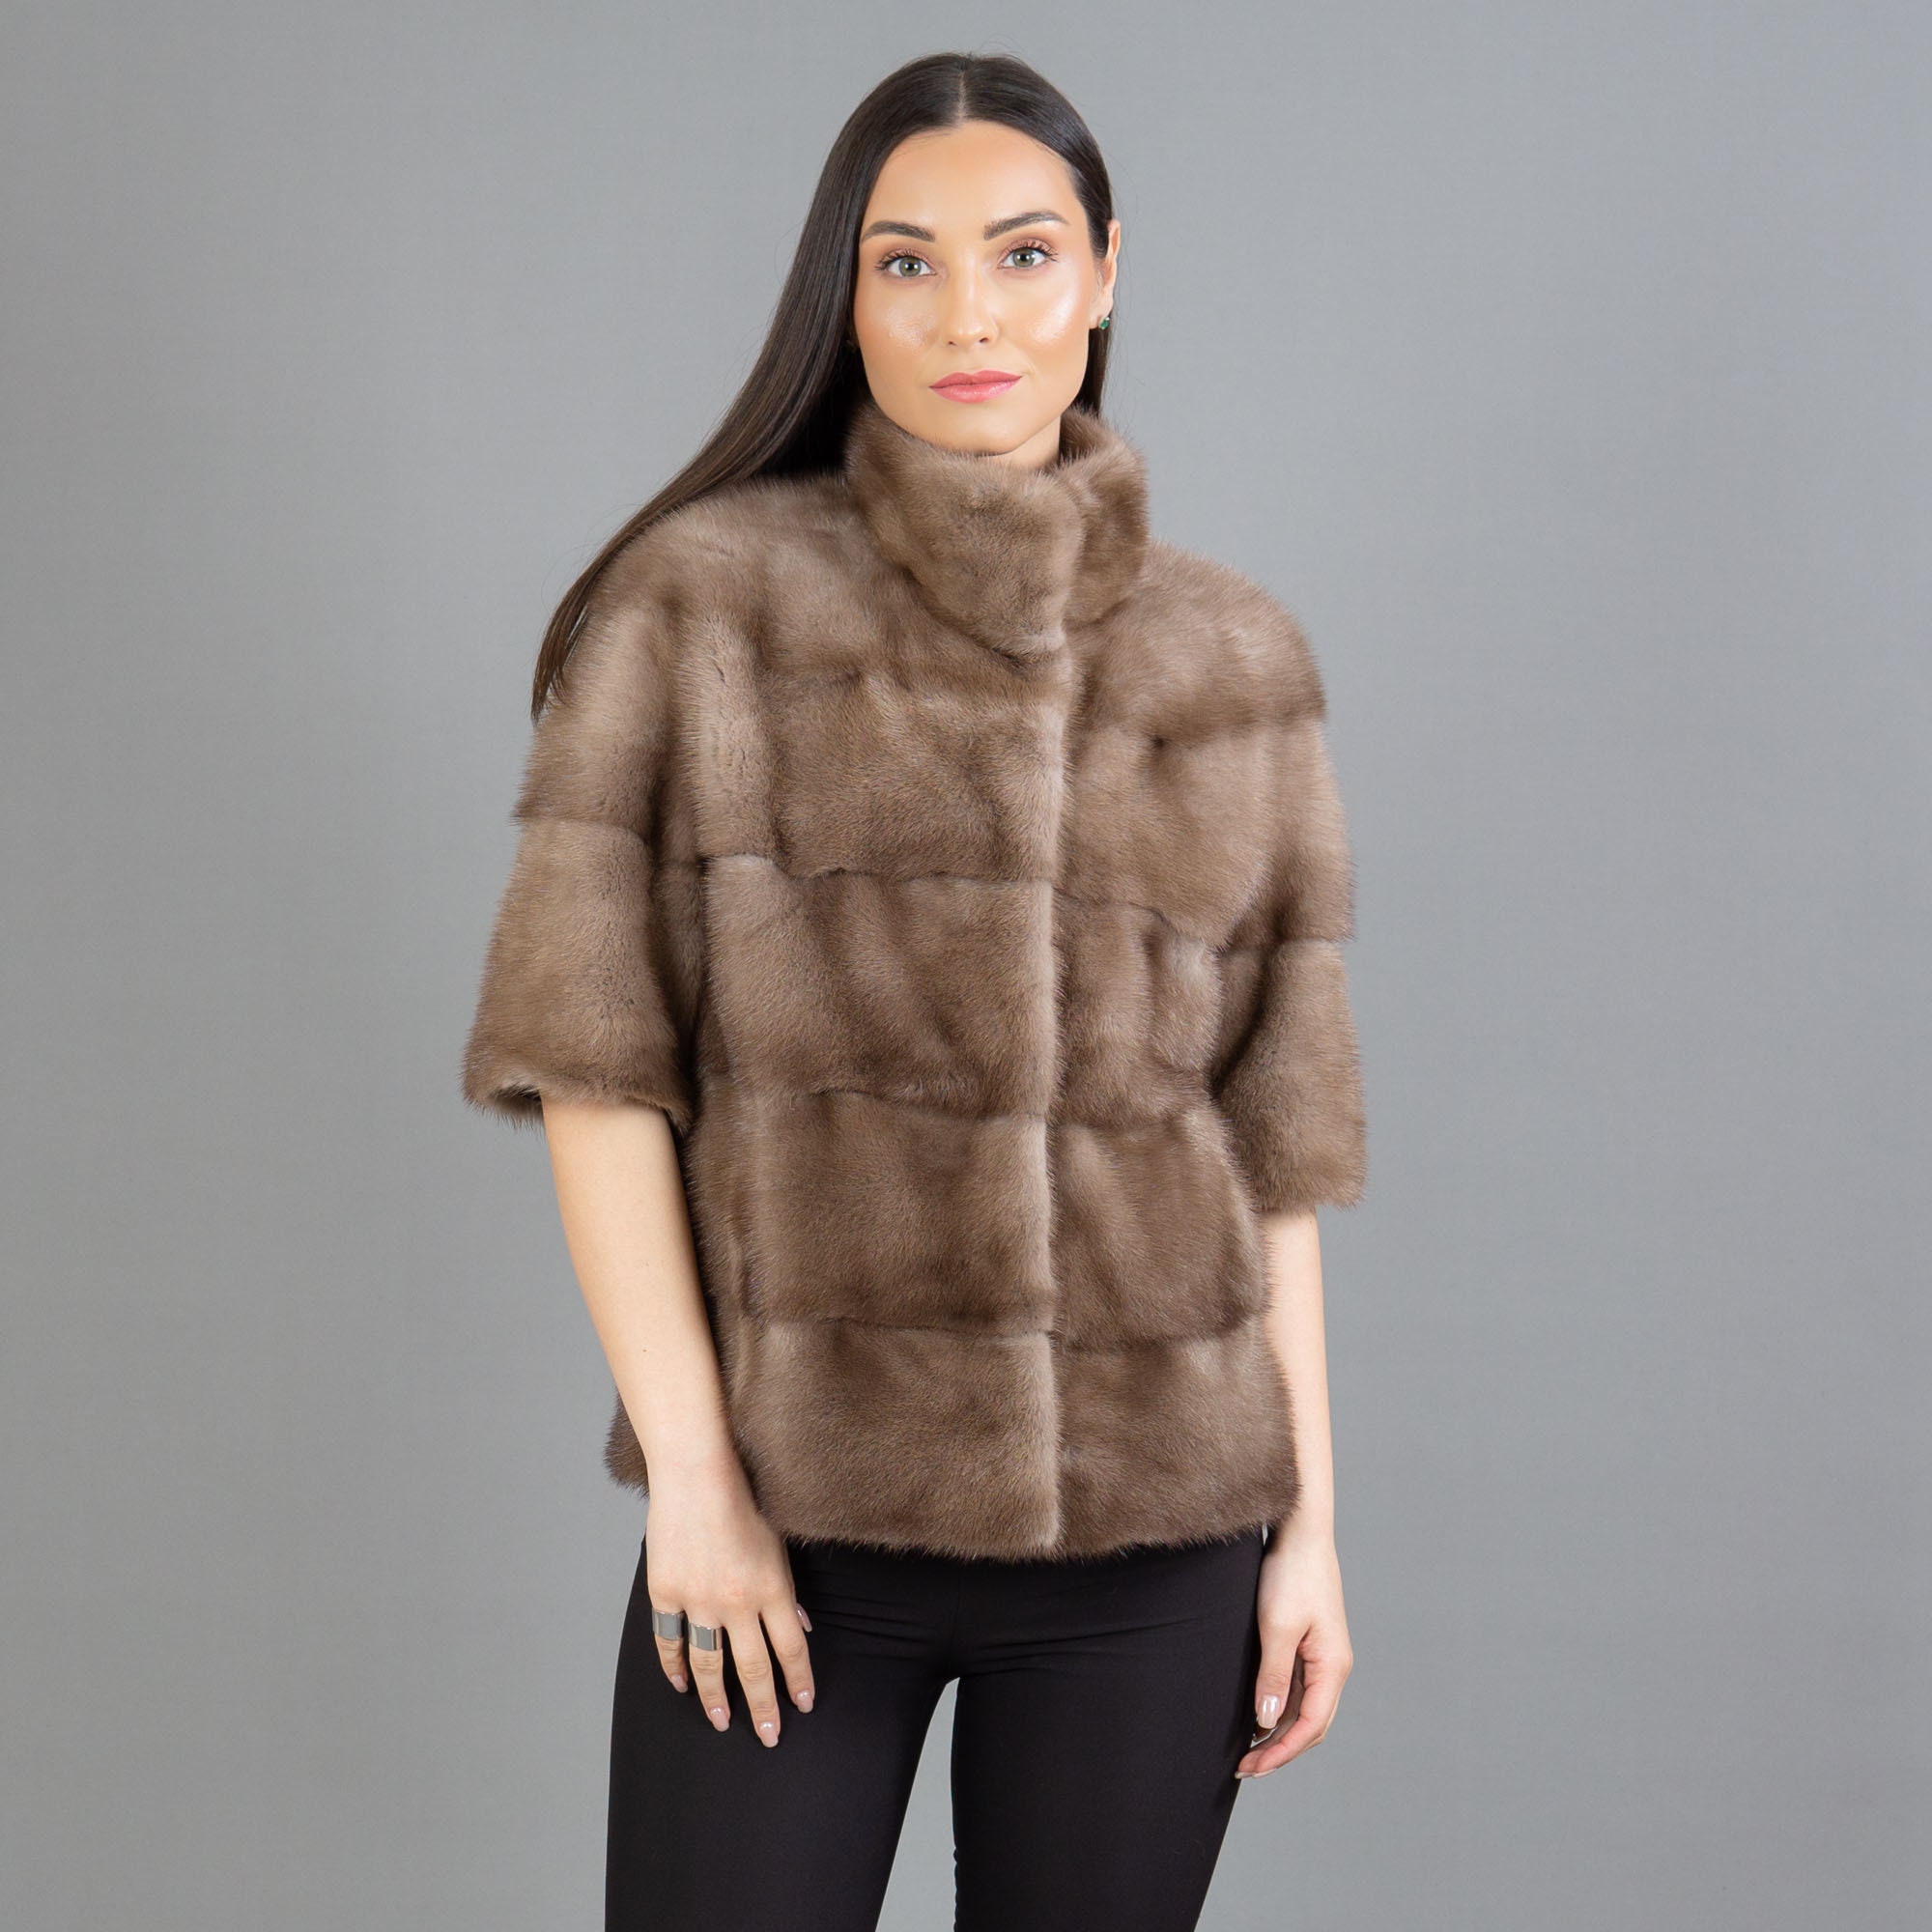 Brown Mink Fur Coat 2 in 1 Styles Mink Fur Jacket 